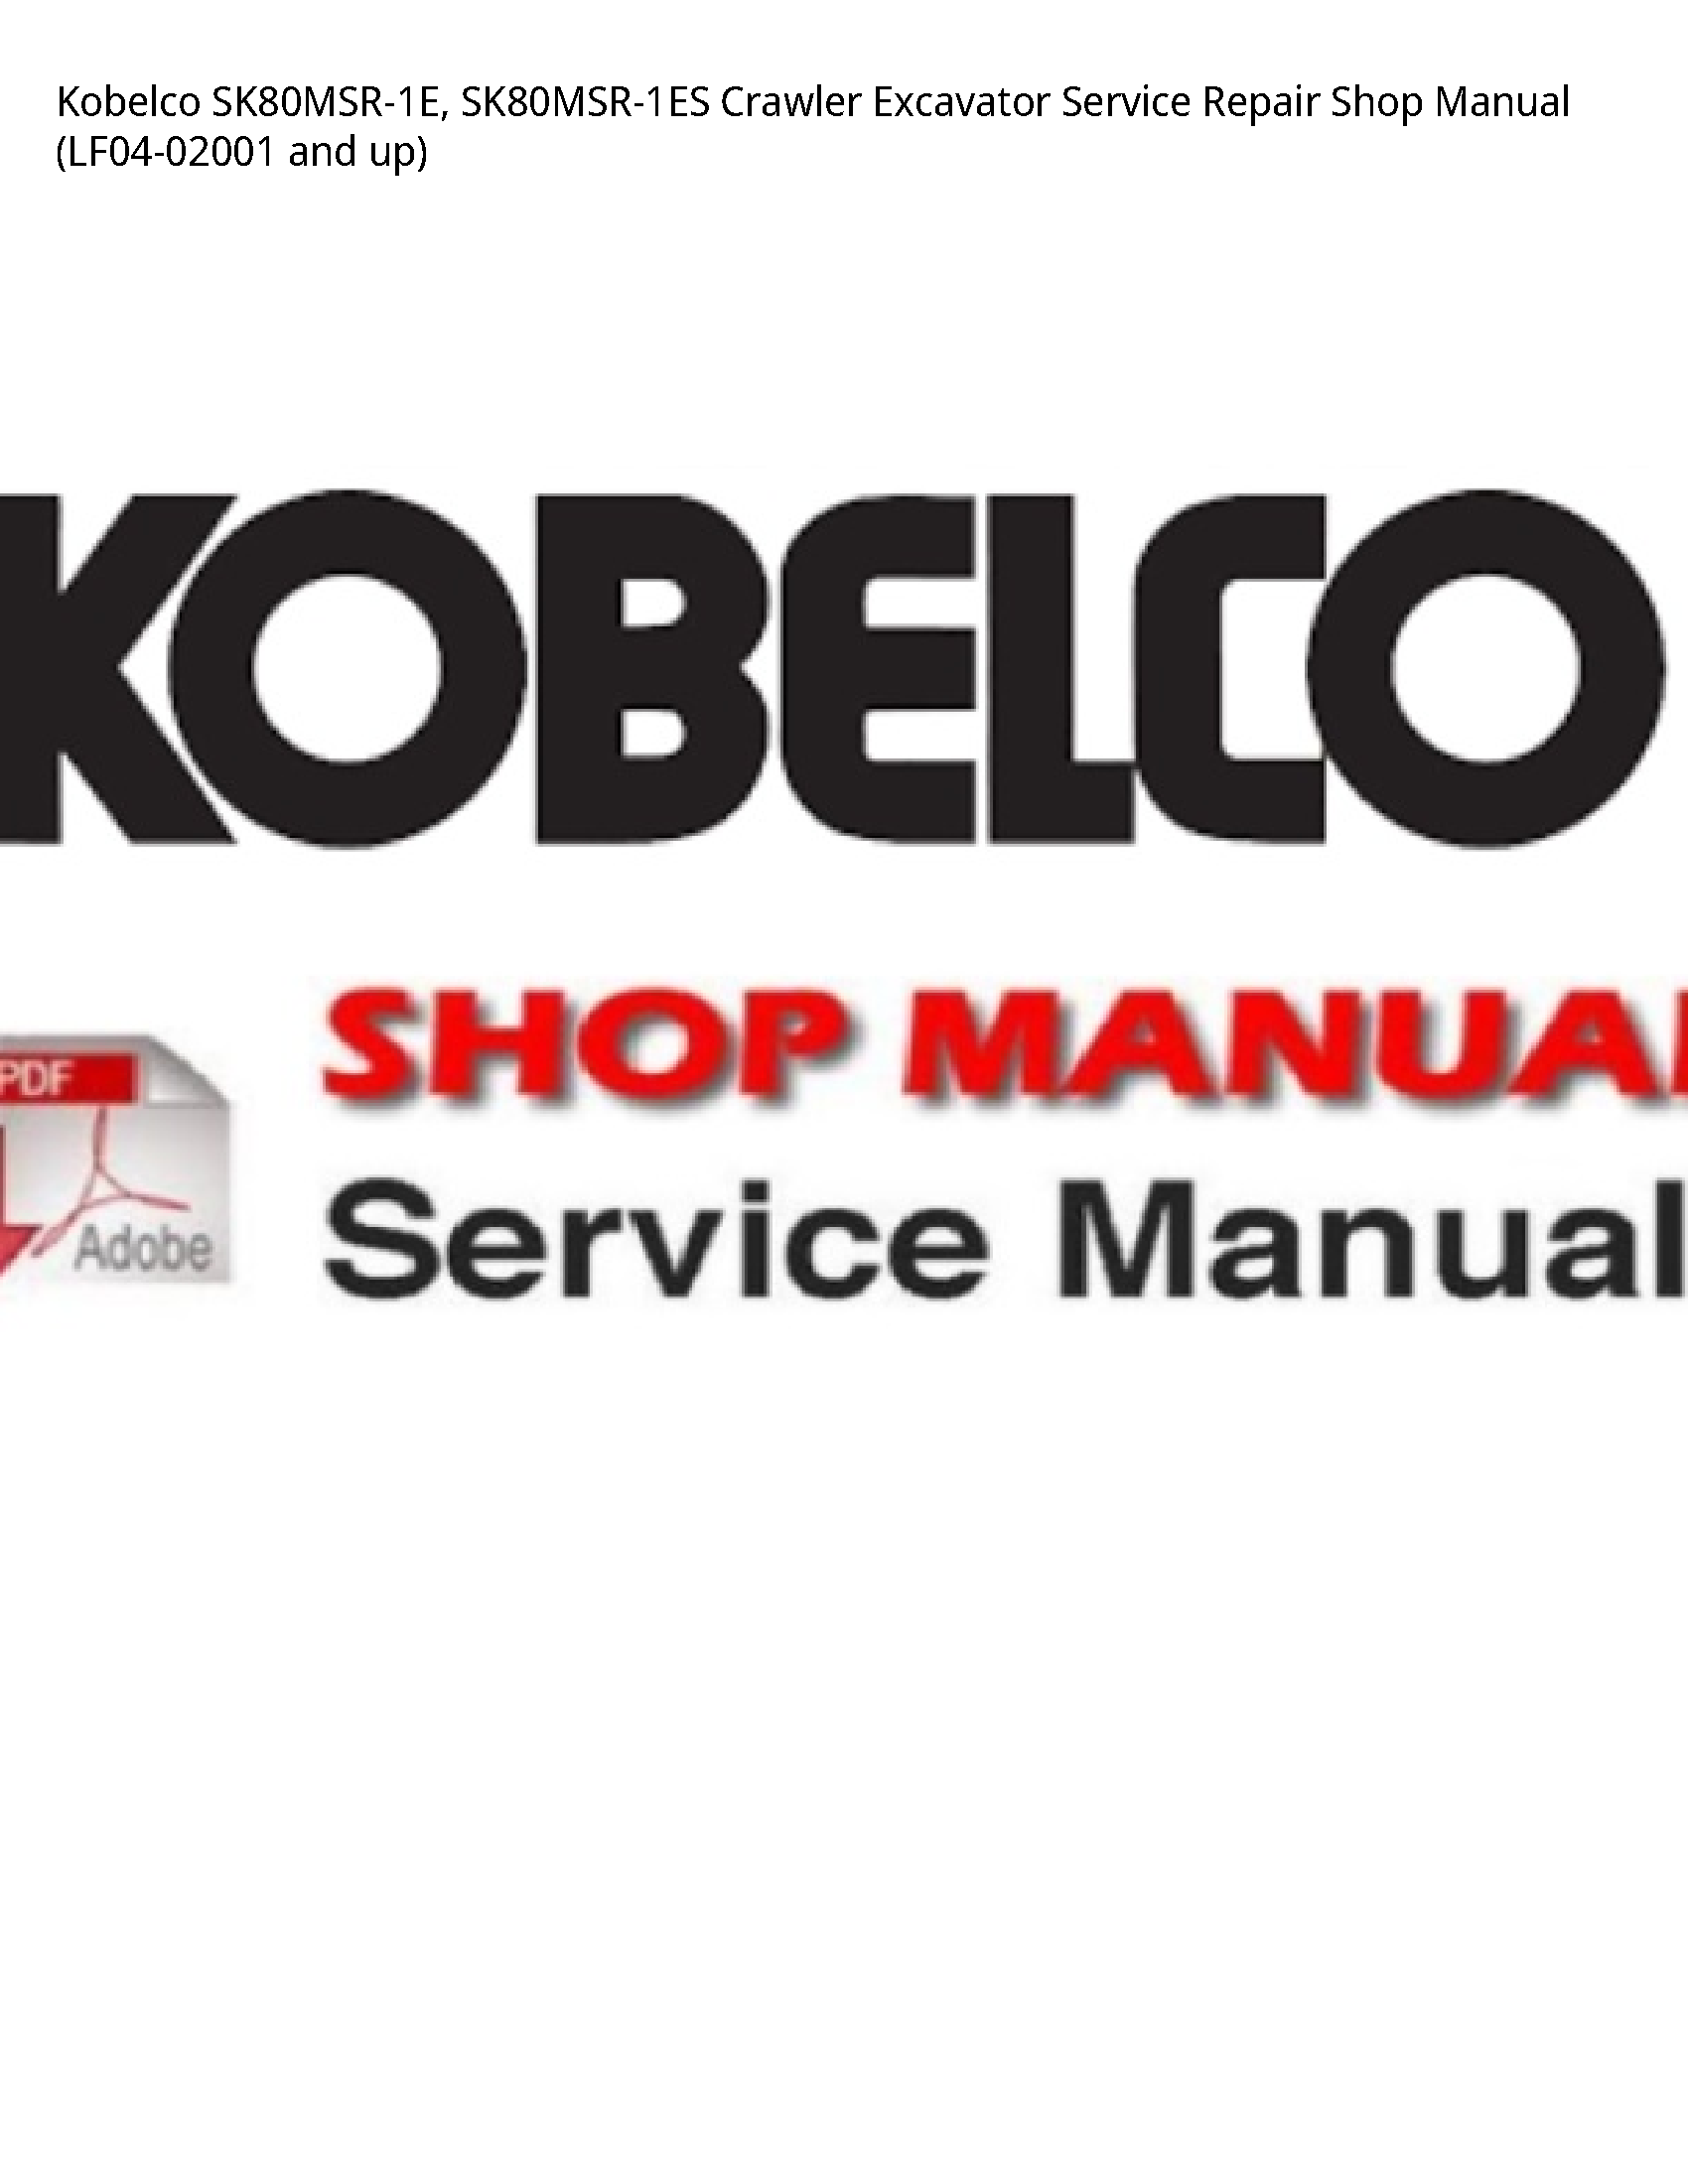 Kobelco SK80MSR-1E Crawler Excavator manual